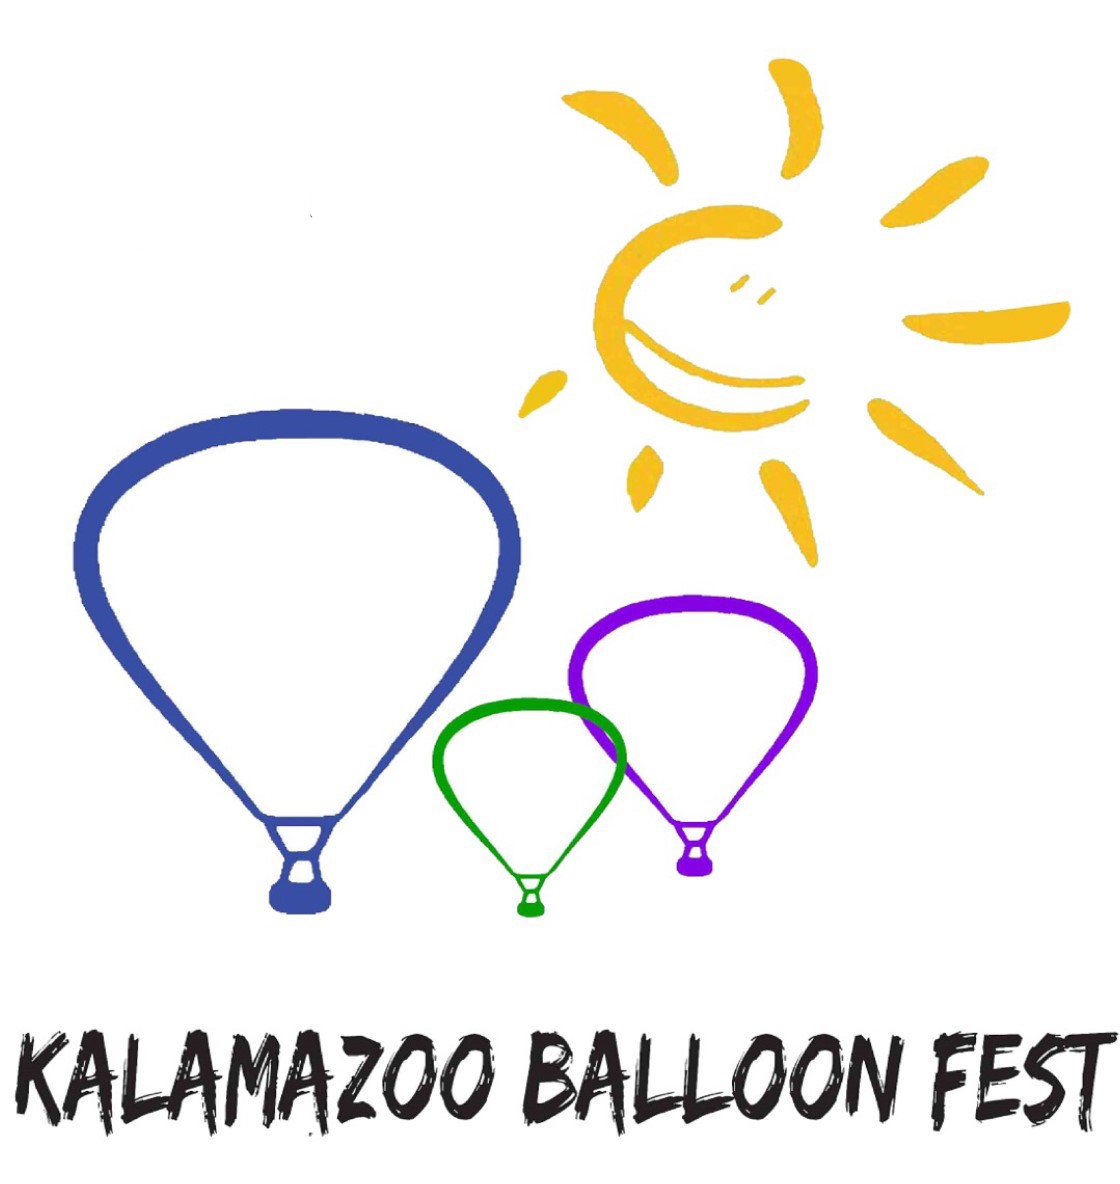 Kalamazoo Balloon Fest